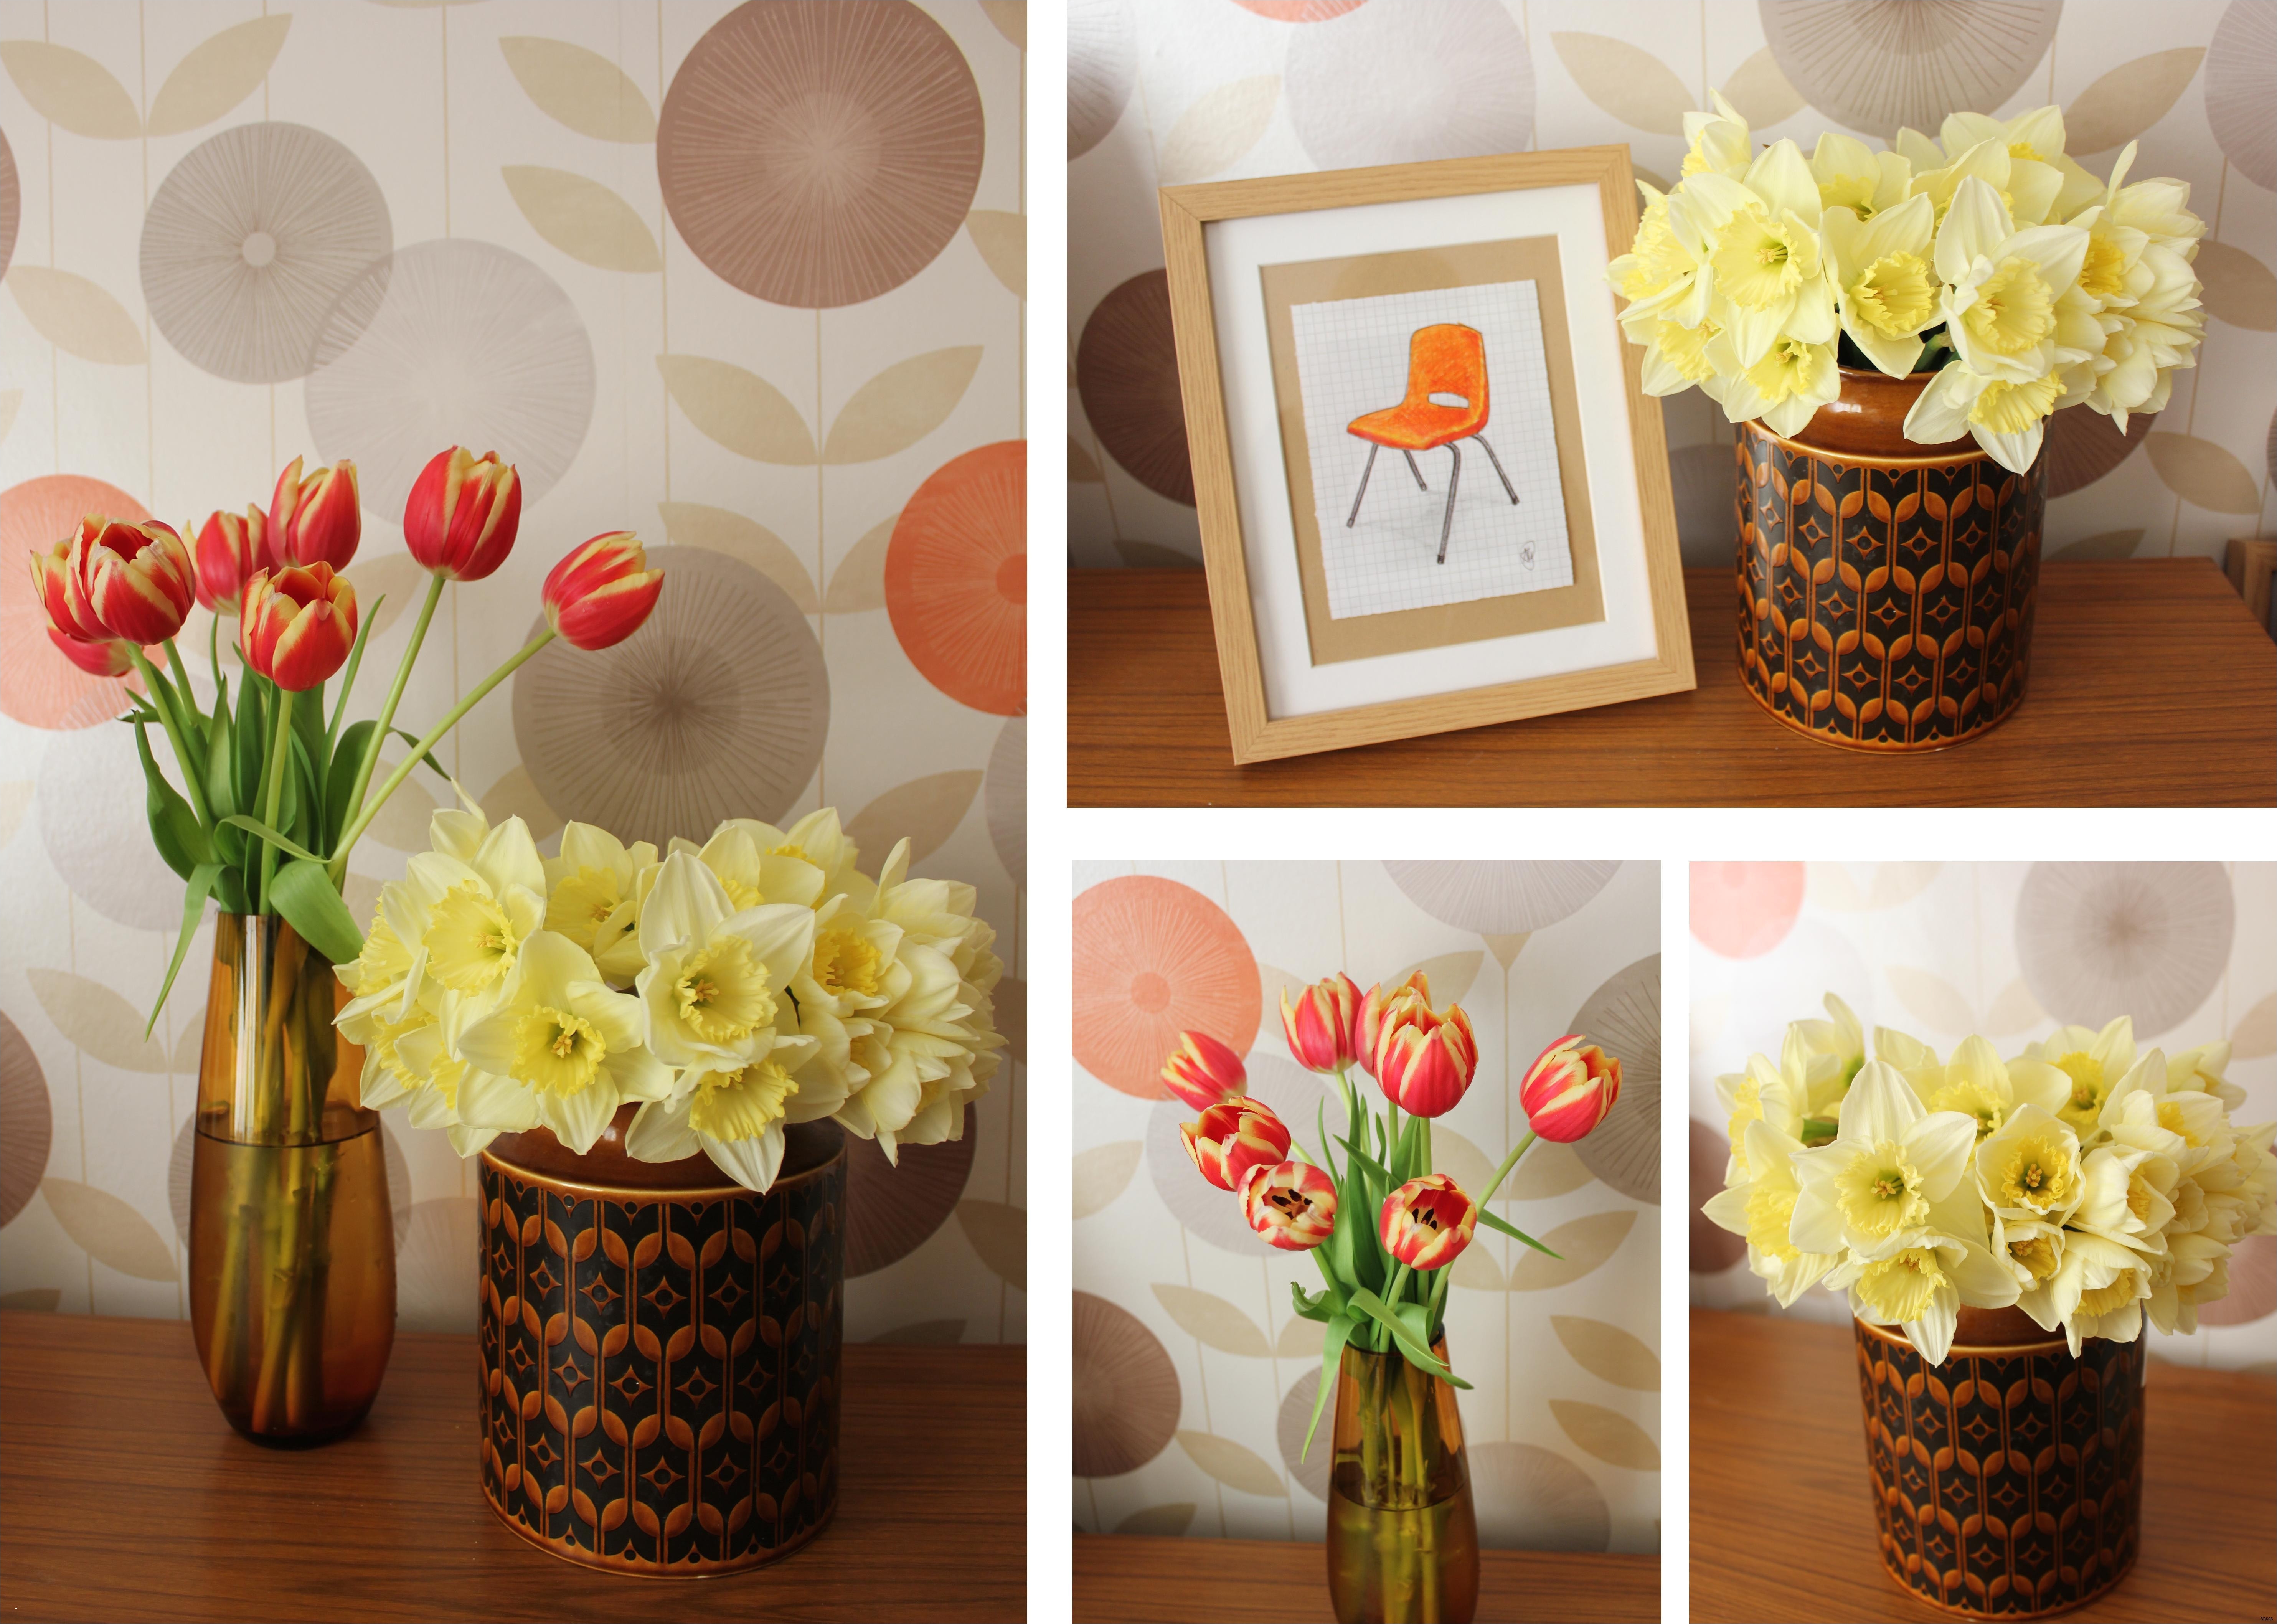 ideas for birthday new diy home decor vaseh vases decorative flower ideas i 0d design ideas